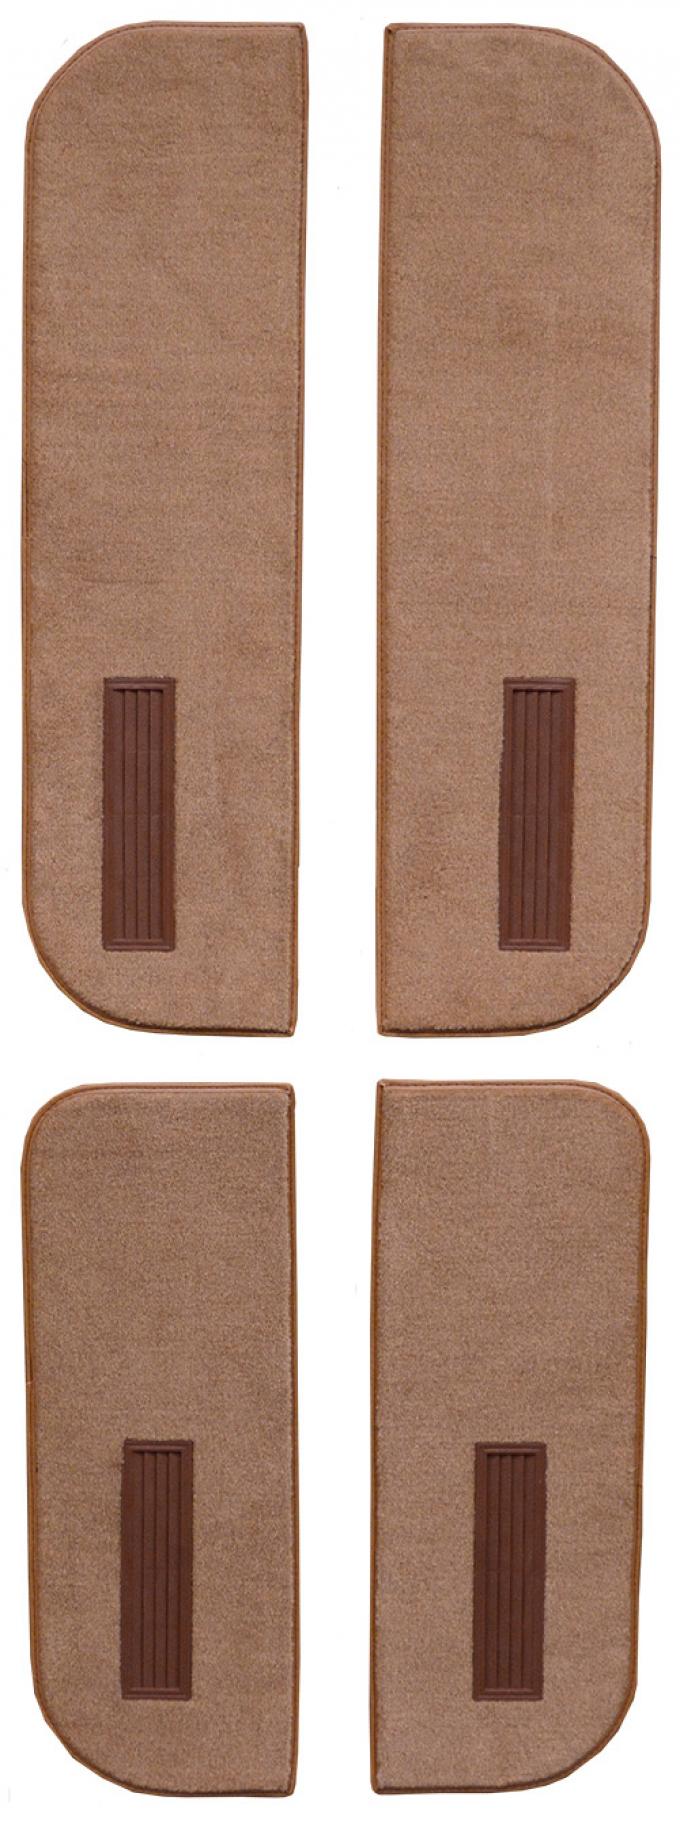 ACC 1987-1988 GMC R1500 Suburban Door Panel Inserts on Cardboard w/Vents 4pc Cutpile Carpet